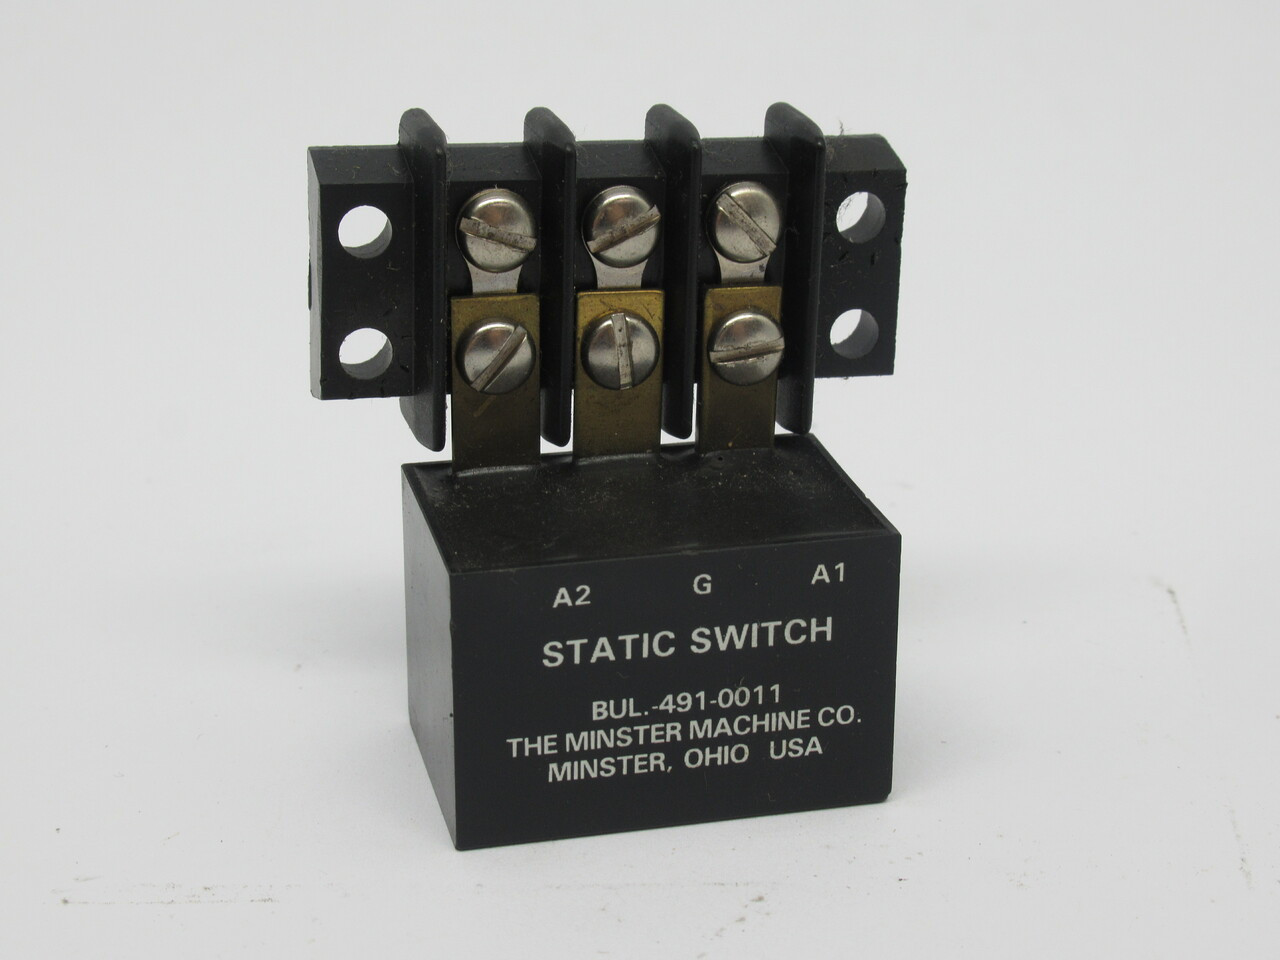 Minster BUL.-491-0011 Static Switch 3-Pole USED